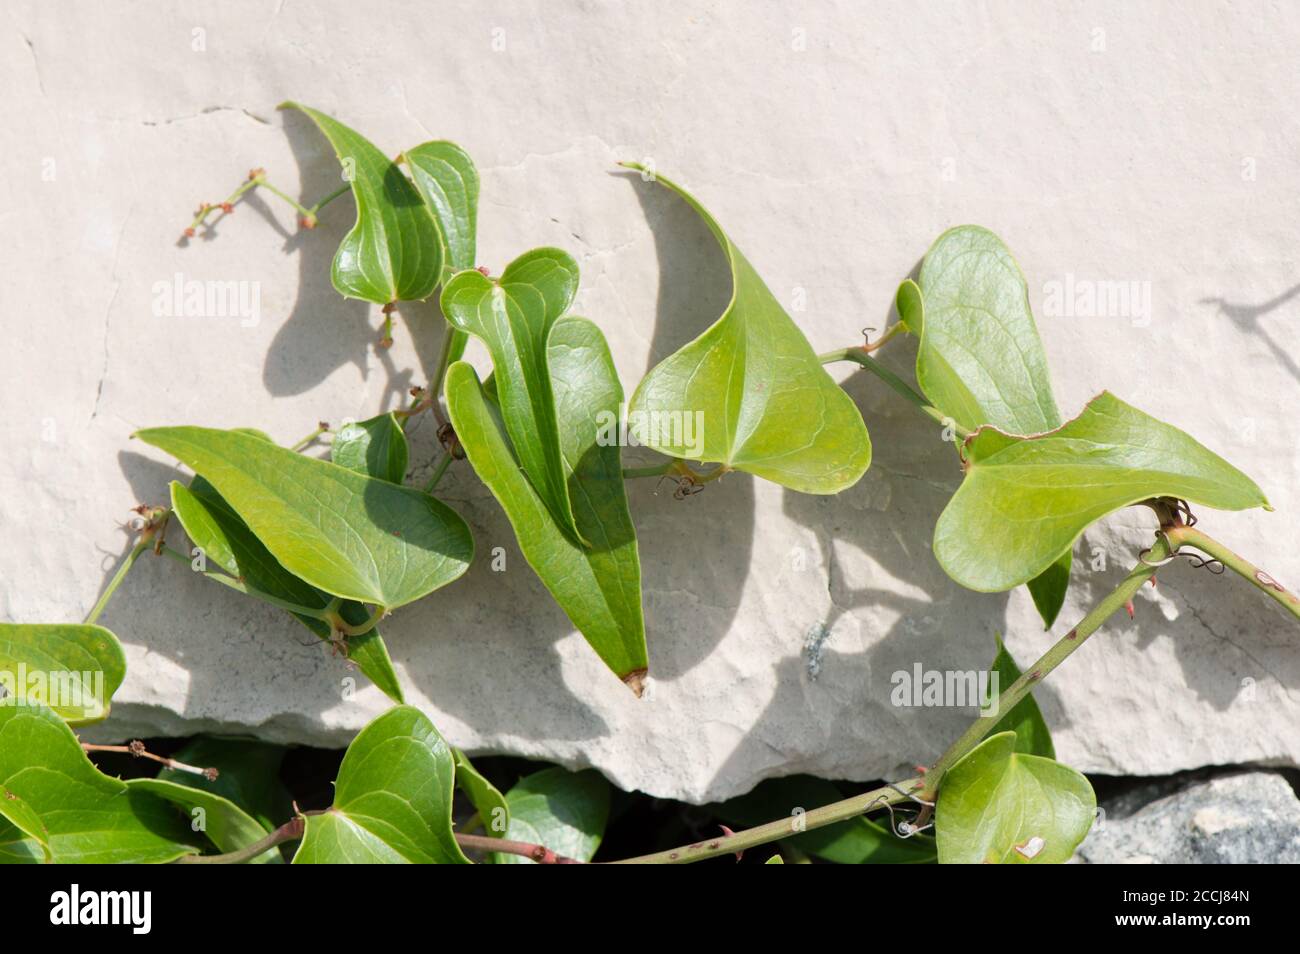 Heart-shaped leaves, common smilax lat. Smilax aspera growing by the sharp rocks, from Dalmatia, Croatia Stock Photo